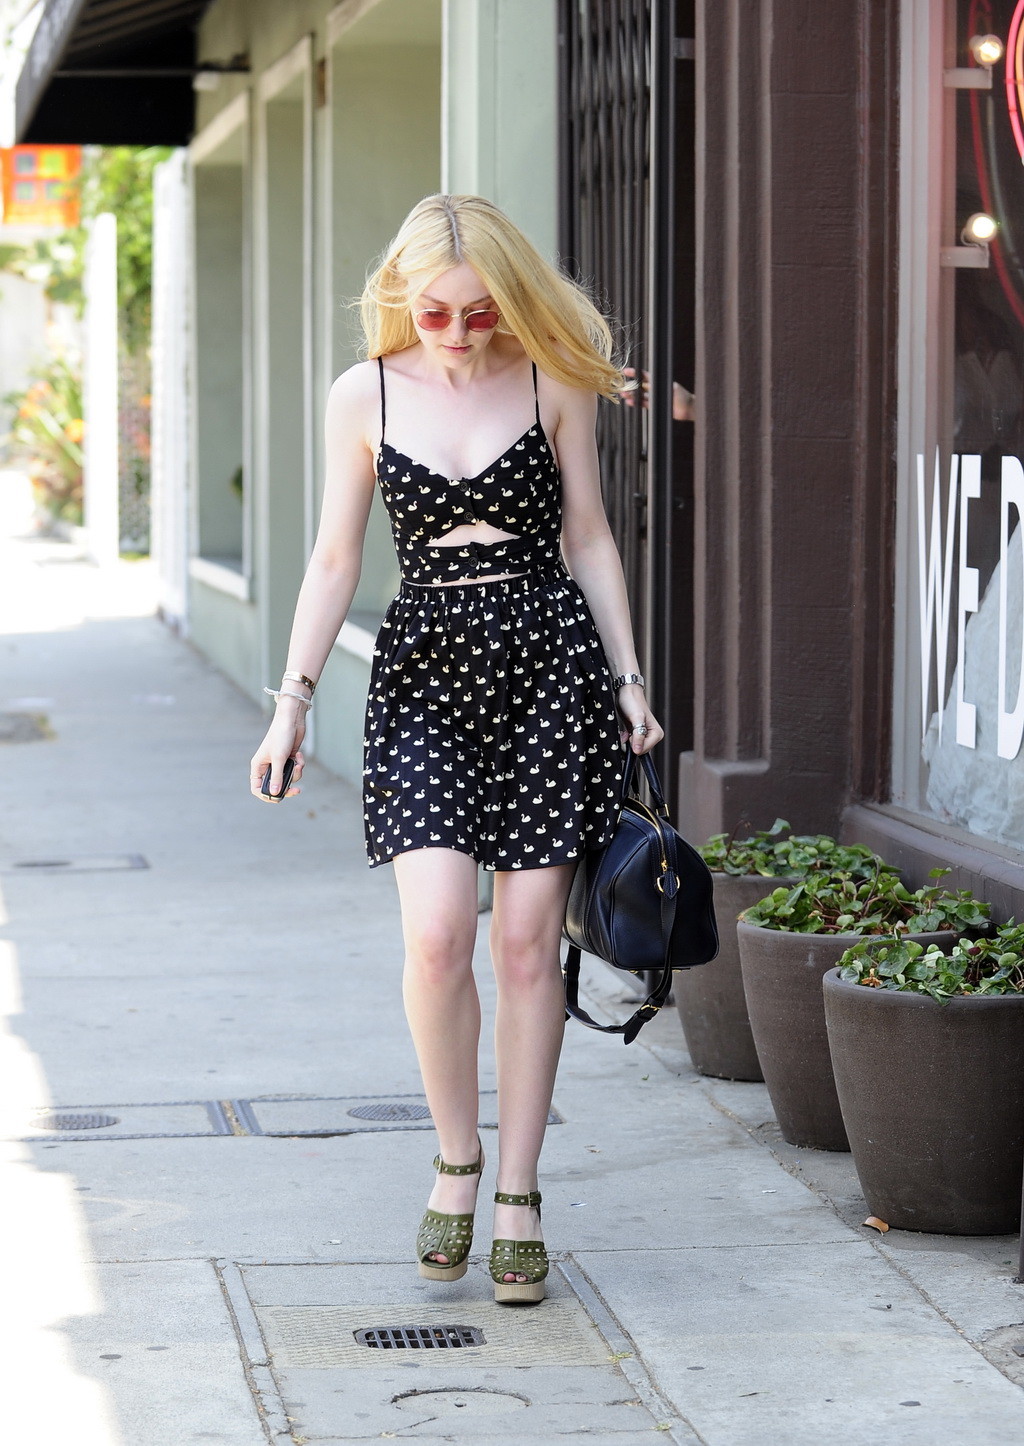 Dakota Fanning wearing tiny mini dress while strolling in Beverly Hills on sunny #75259334